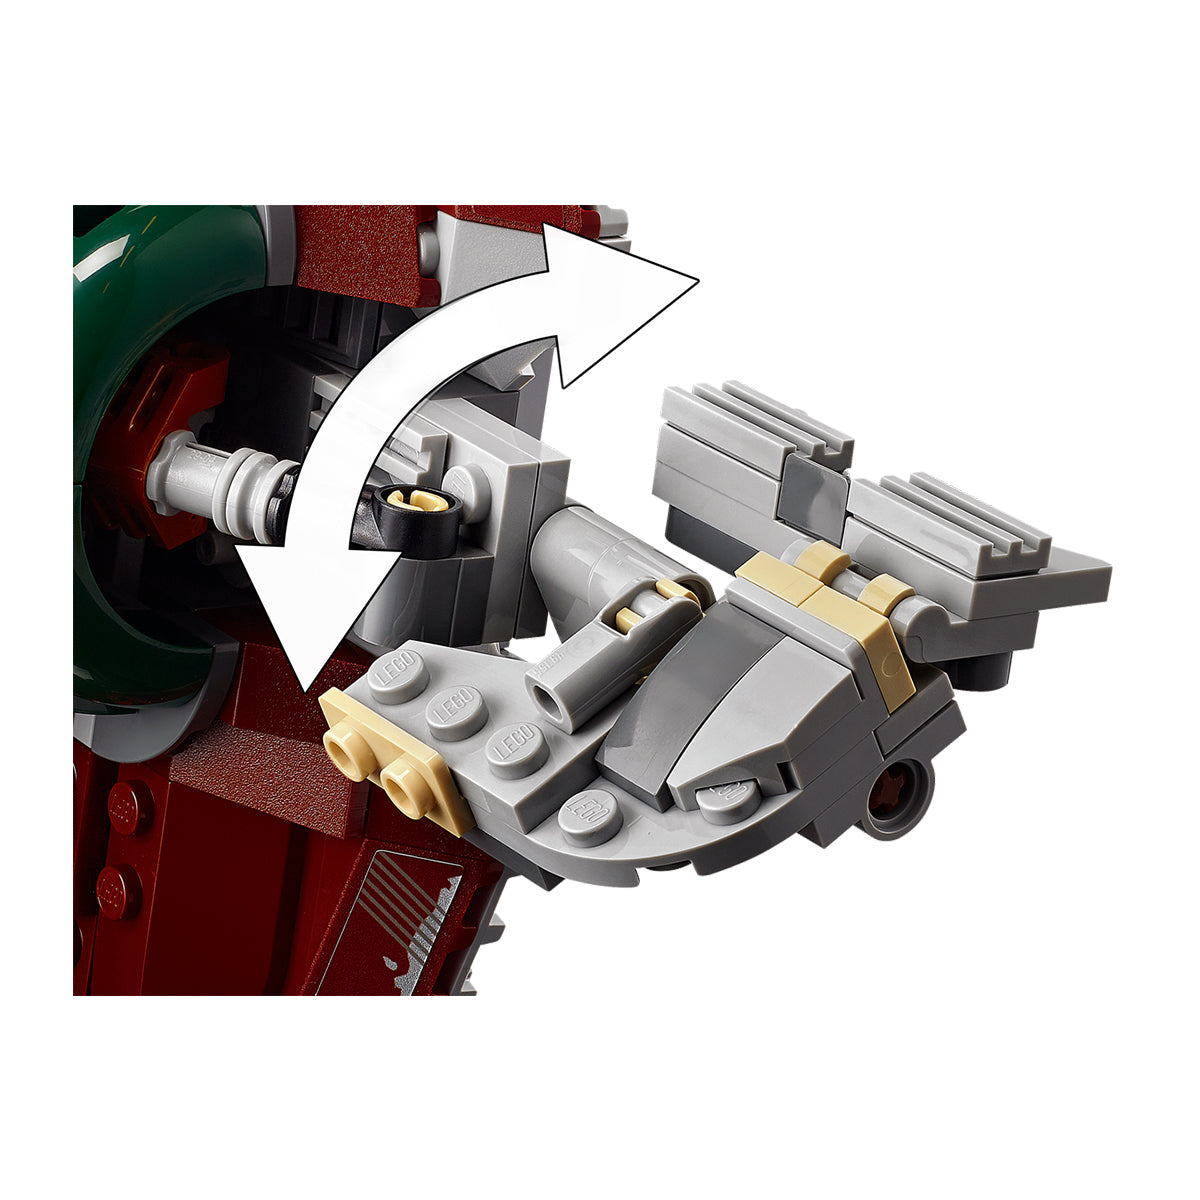 LEGO Star Wars - Boba Fett's Starship 75312